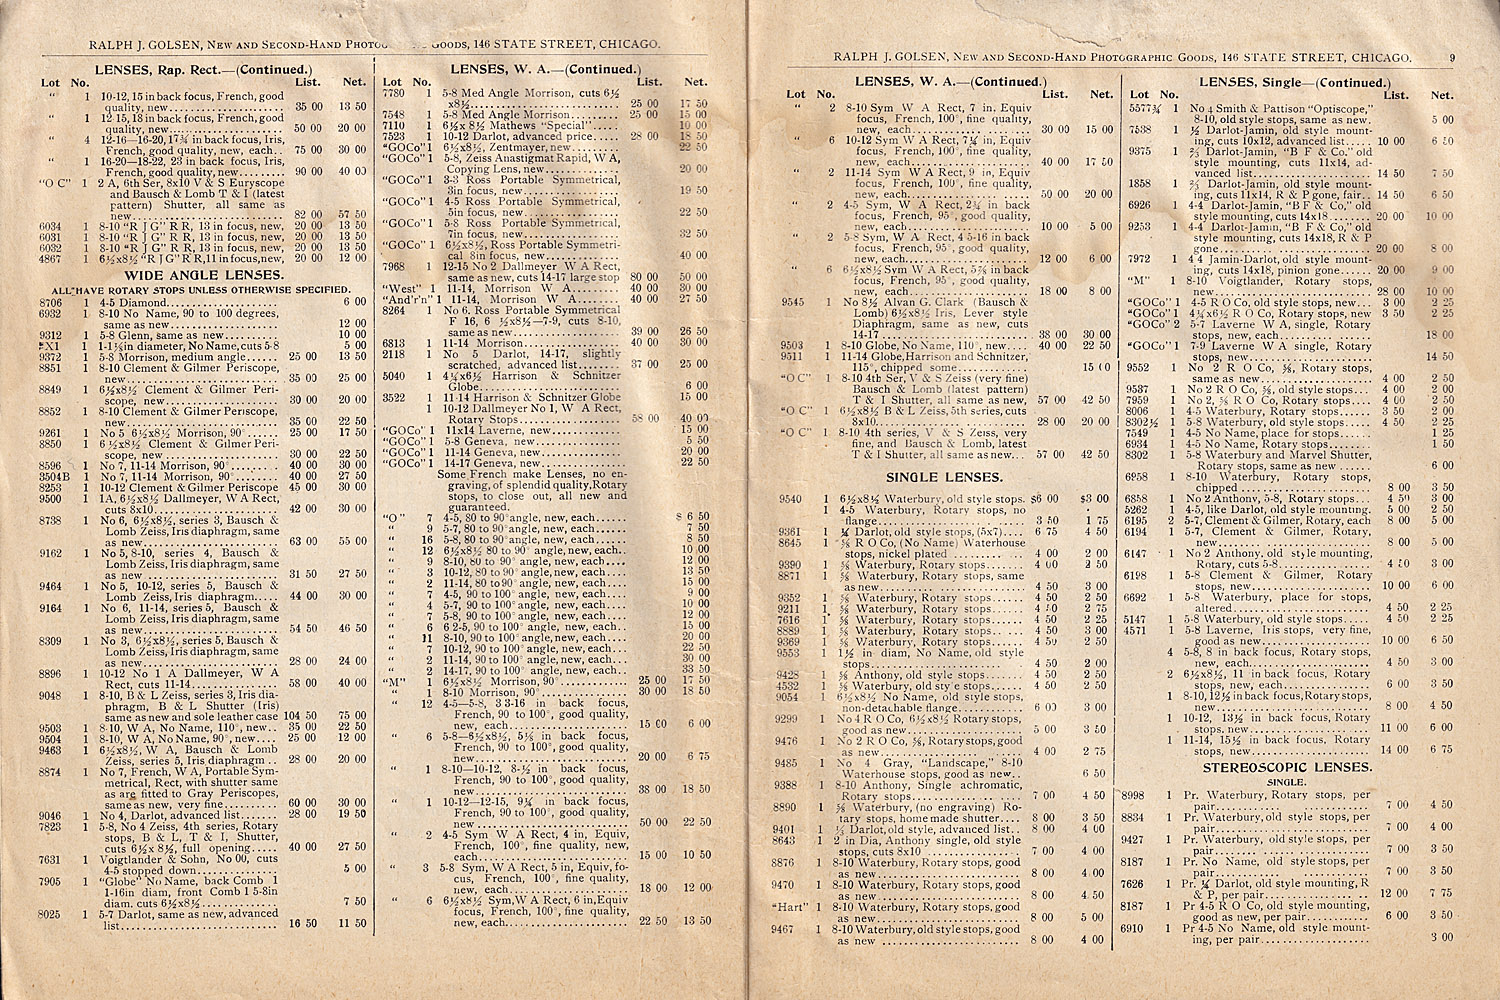 1118.golson.cat.&.bargain.list.no11.1898-08-09-1500.jpg